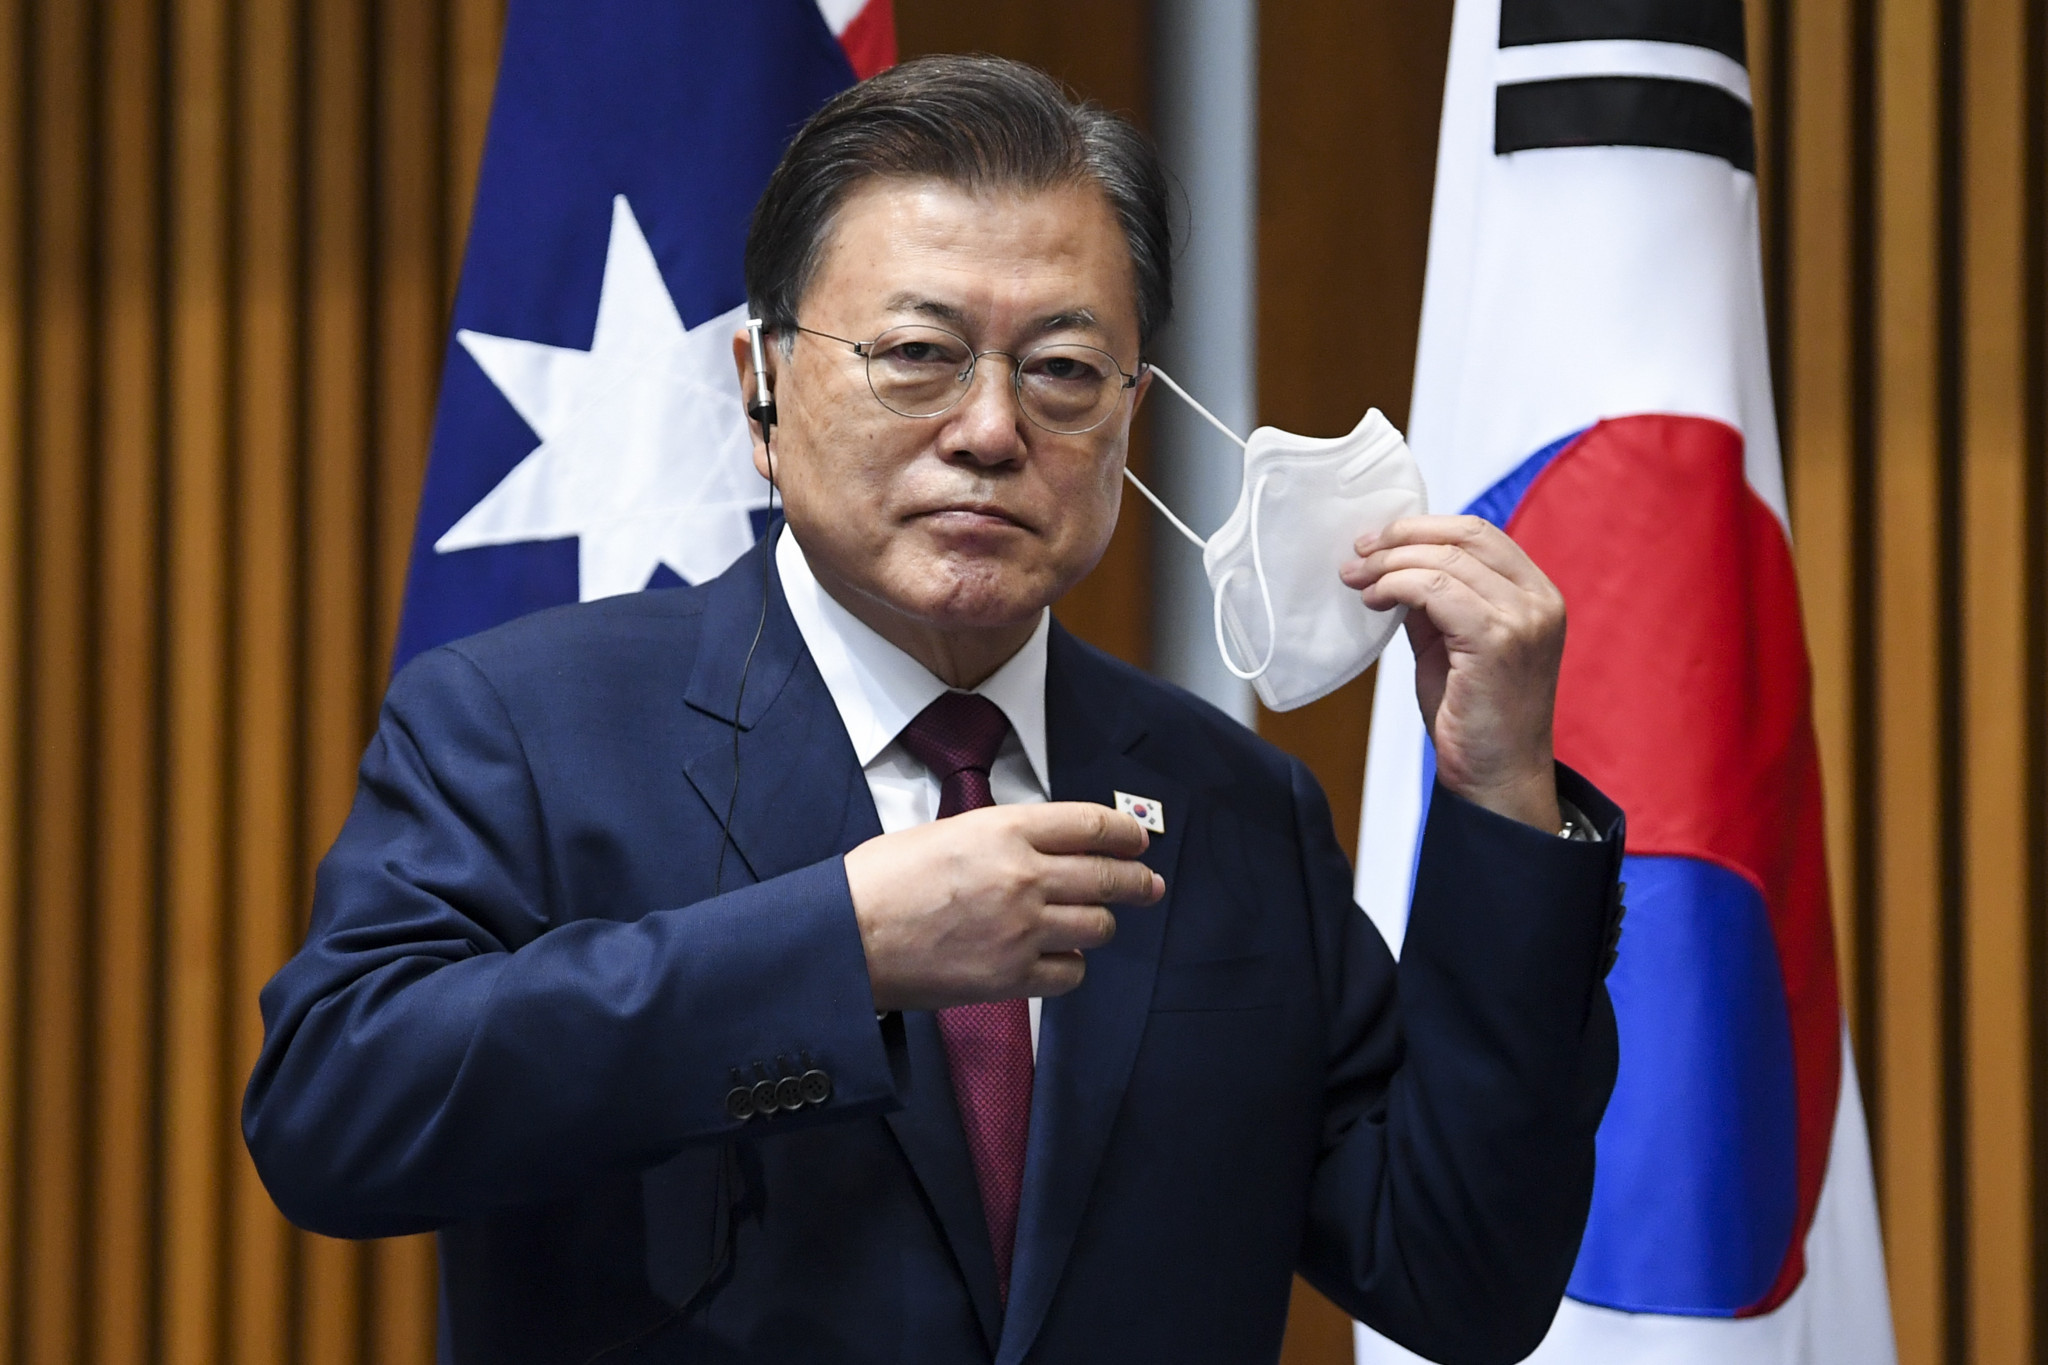 South Korean President Moon to not attend Beijing 2022 despite China invite